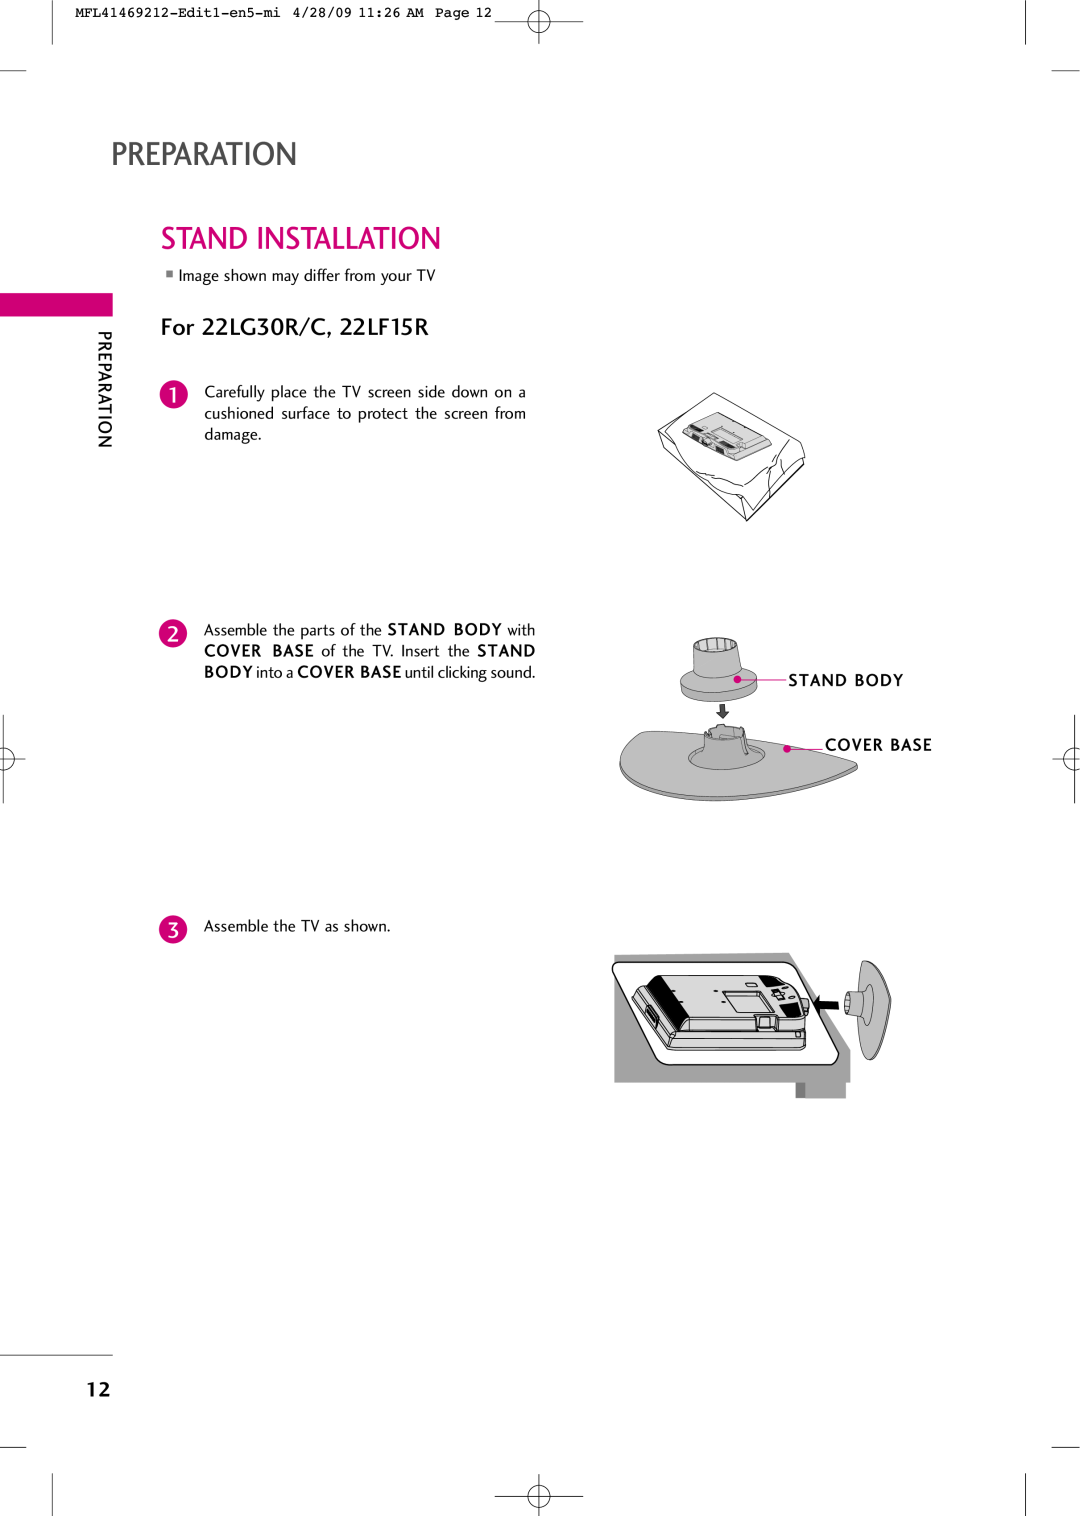 LG Electronics 2230R-MA manual Stand Installation, Preparation, For 22LG30R/C, 22LF15R 